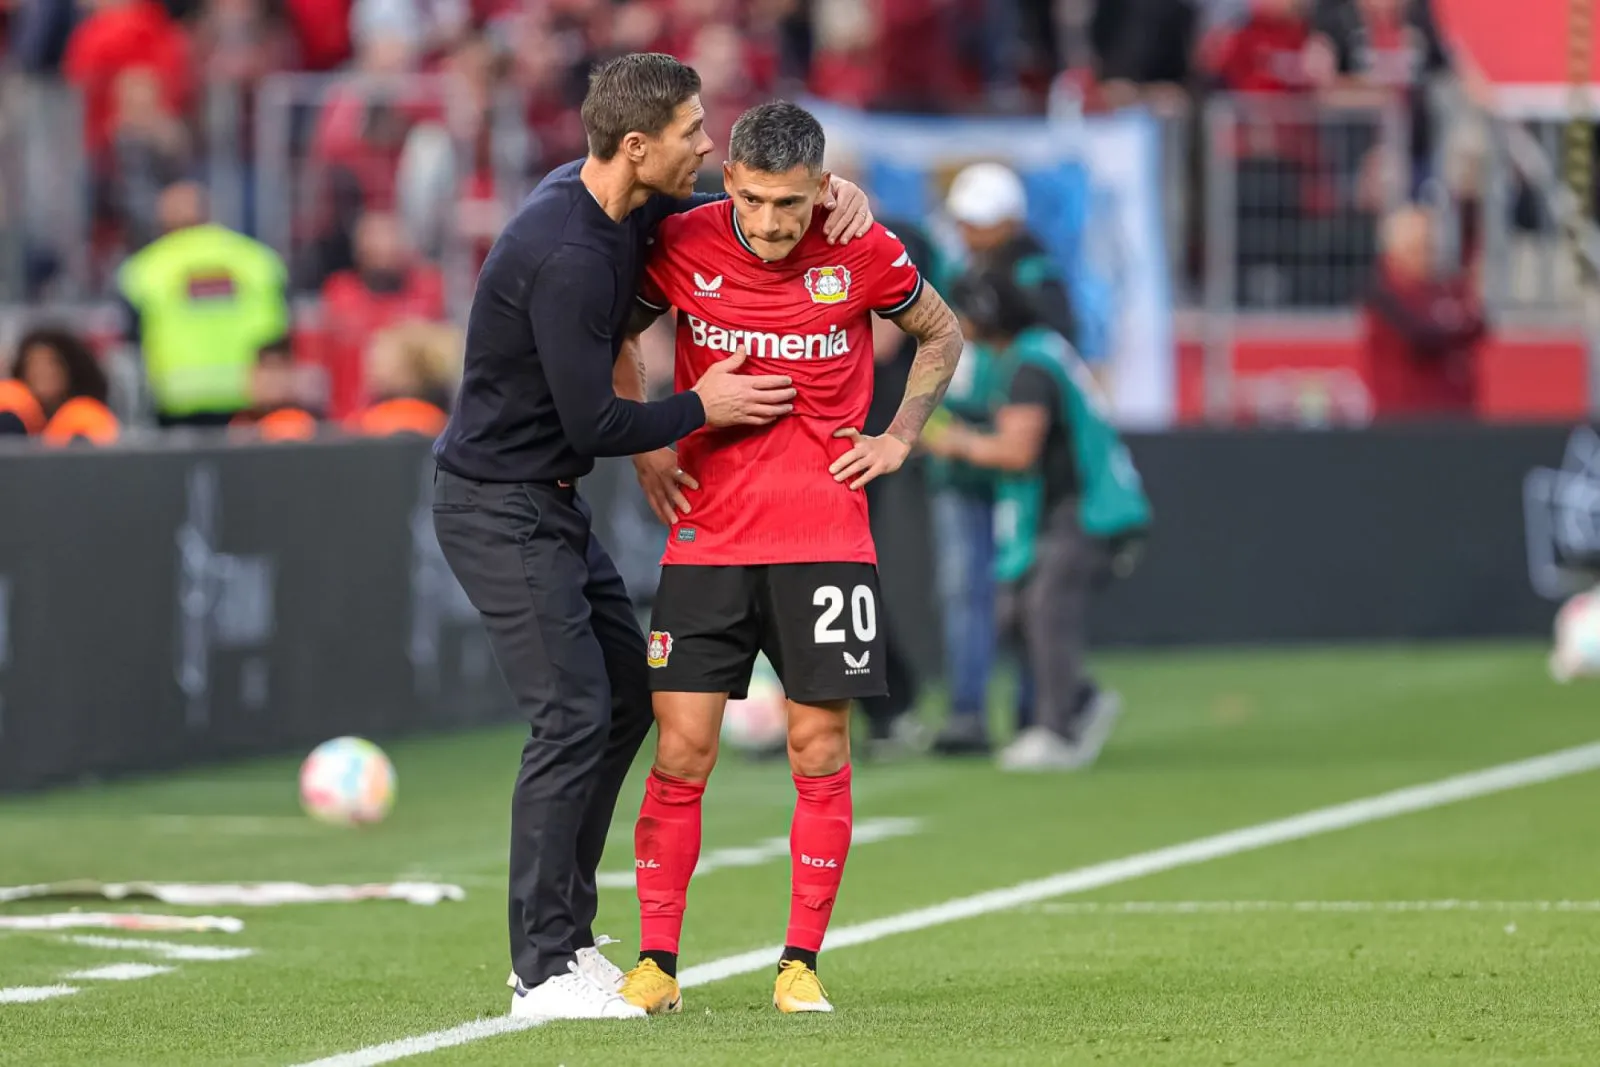 Pronostic Ferencvaros Bayer Leverkusen : Analyse, cotes et prono du match de Ligue Europa